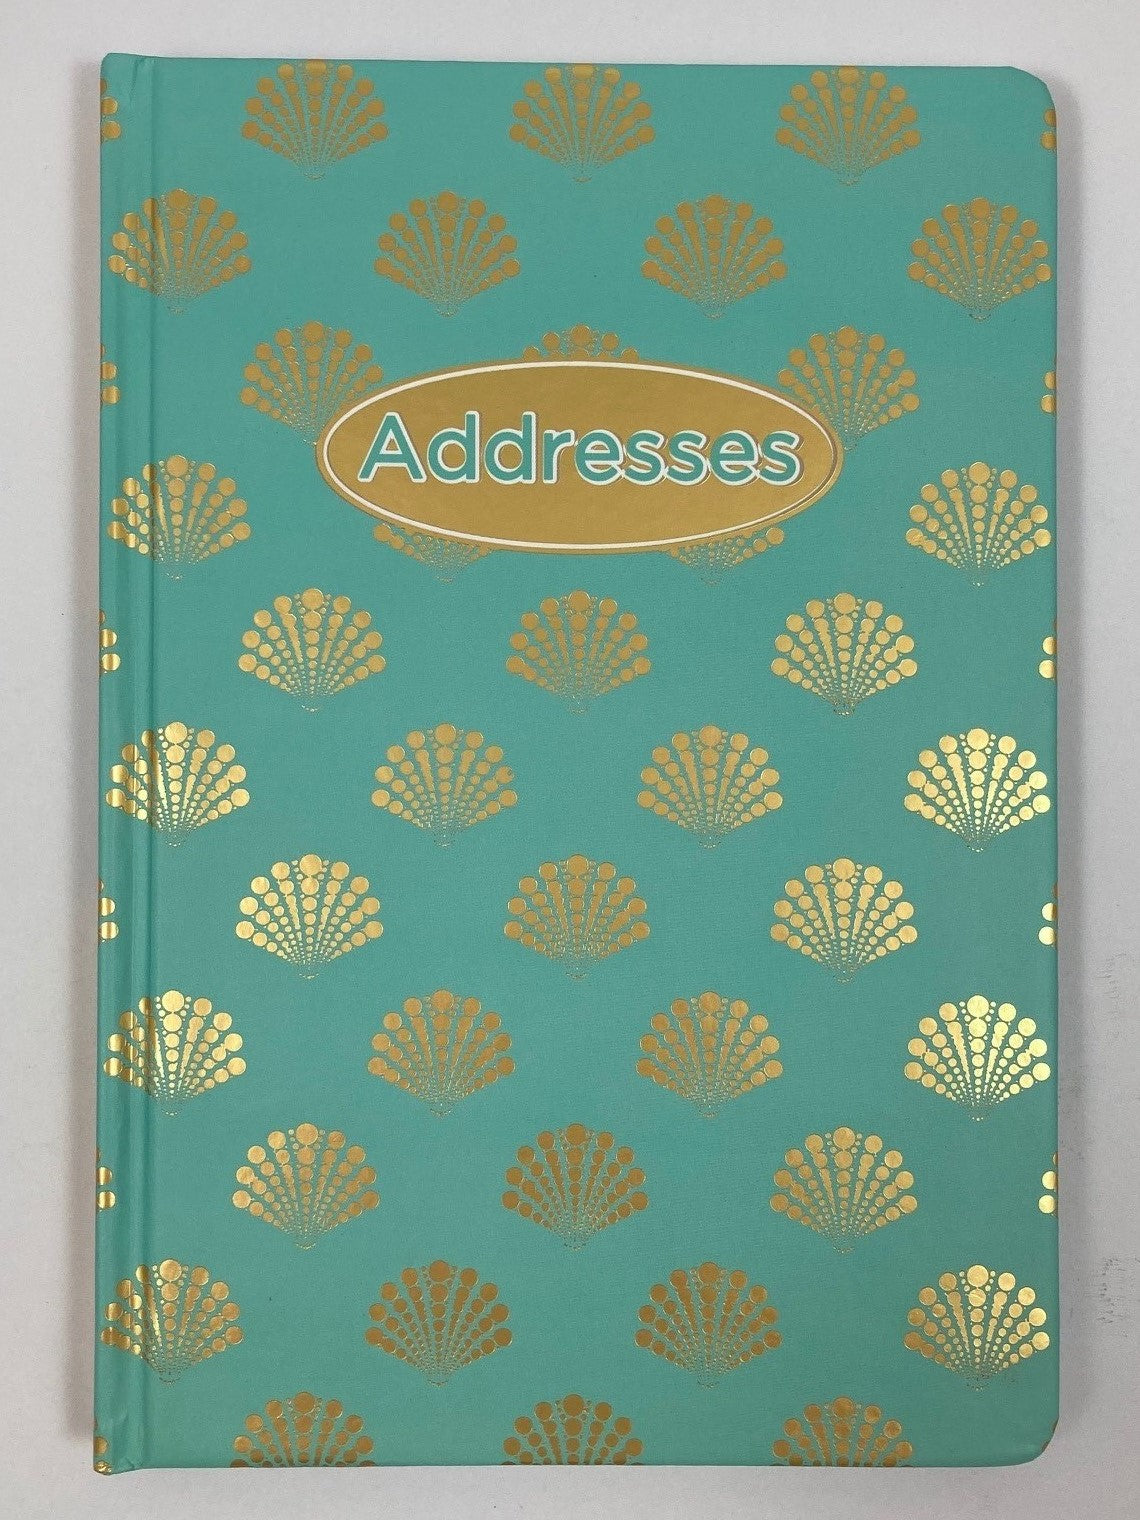 A5 Address Book Case Bound - Golden Seashells 30% OFF